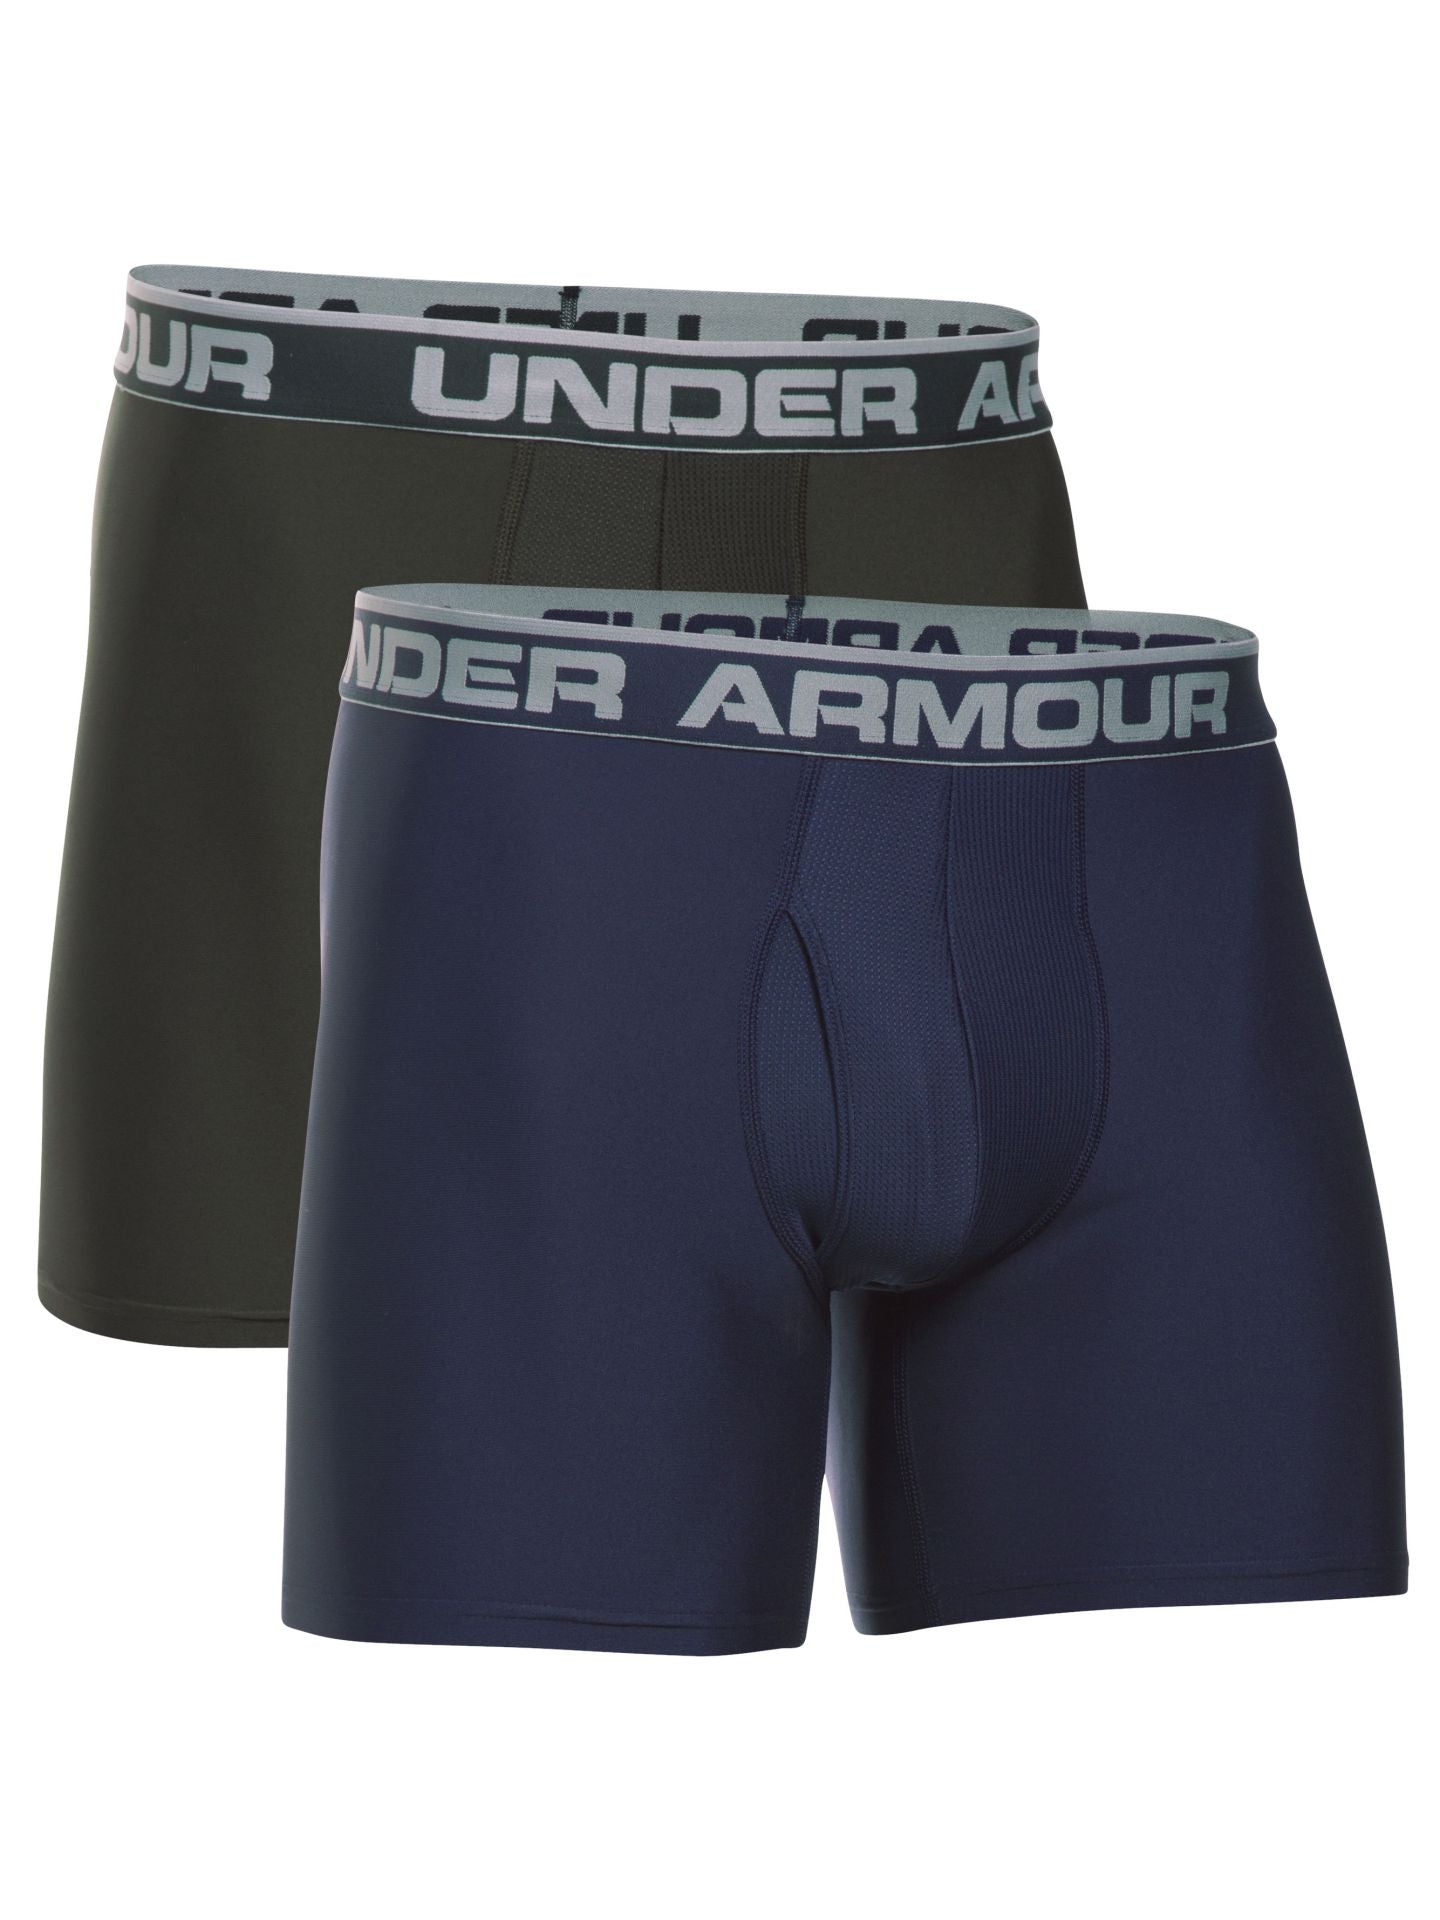 Buy Under Armour Men's Original Series 6-inch Boxerjock Boxer